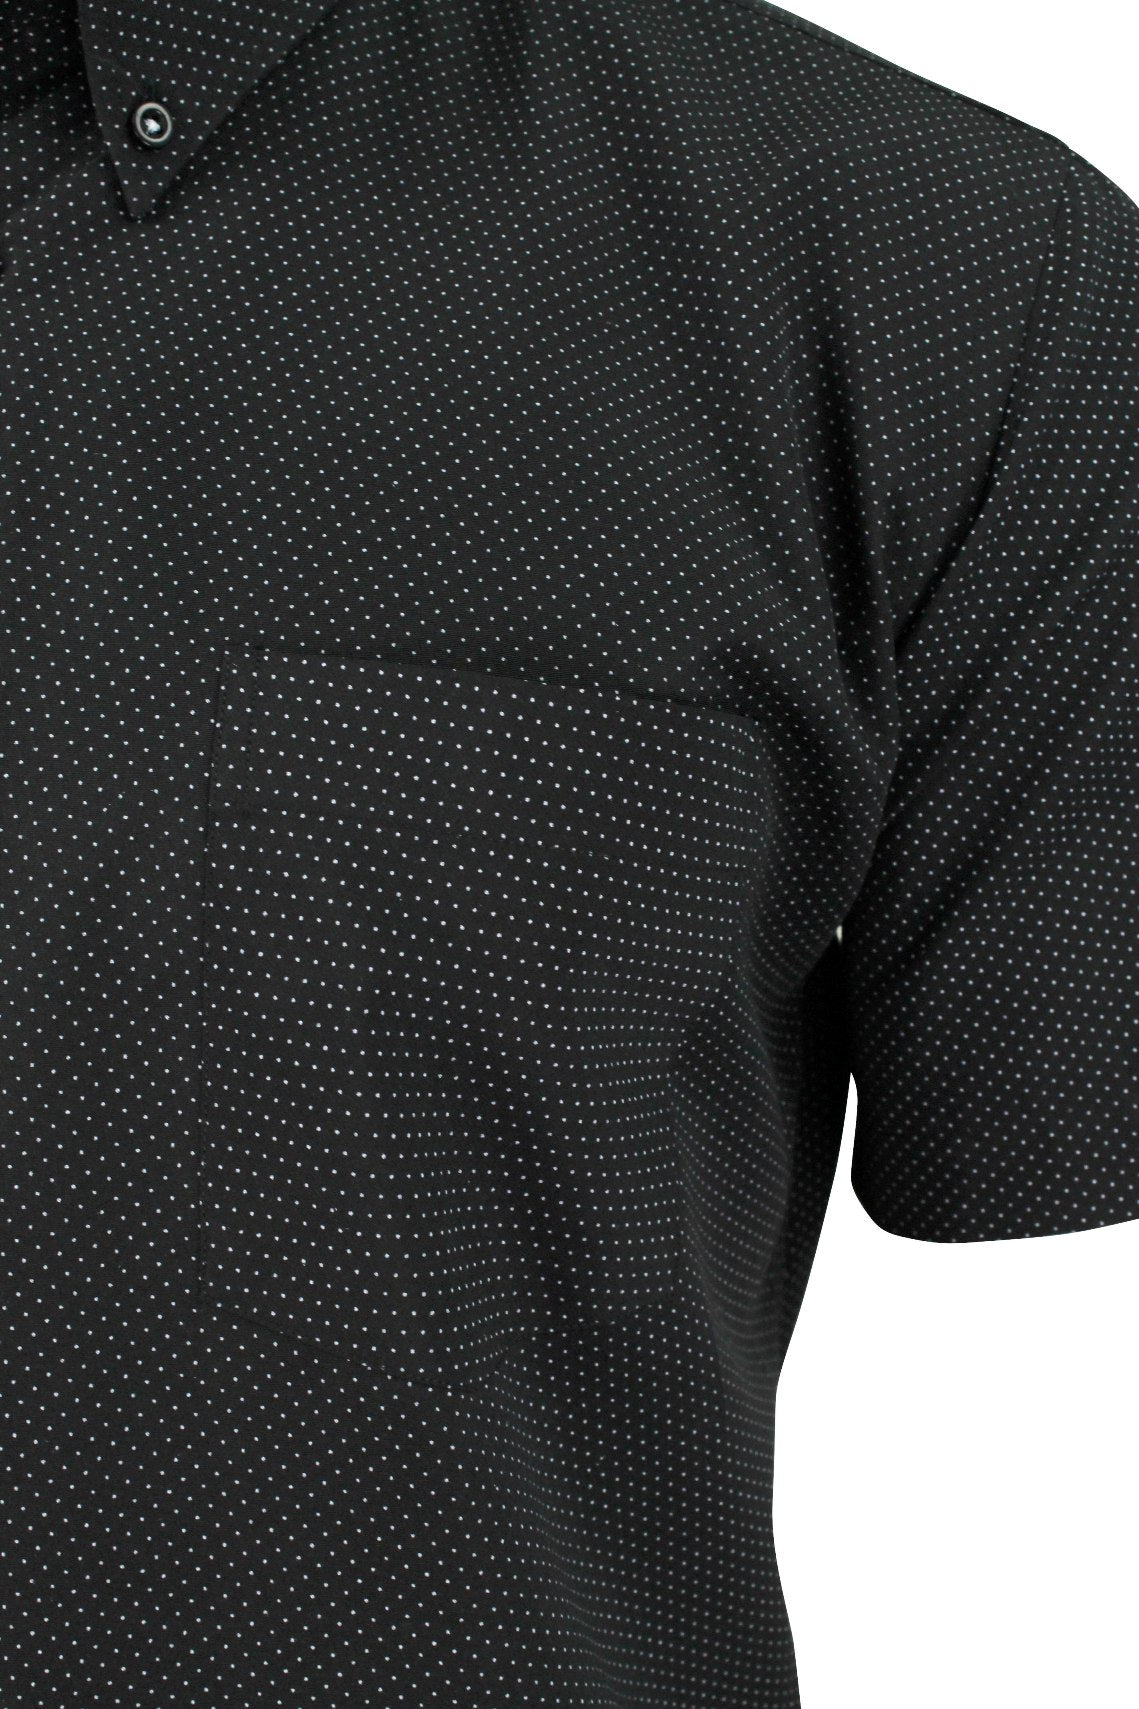 Xact "Mini Polka Dot" Short Sleeved Shirt-2